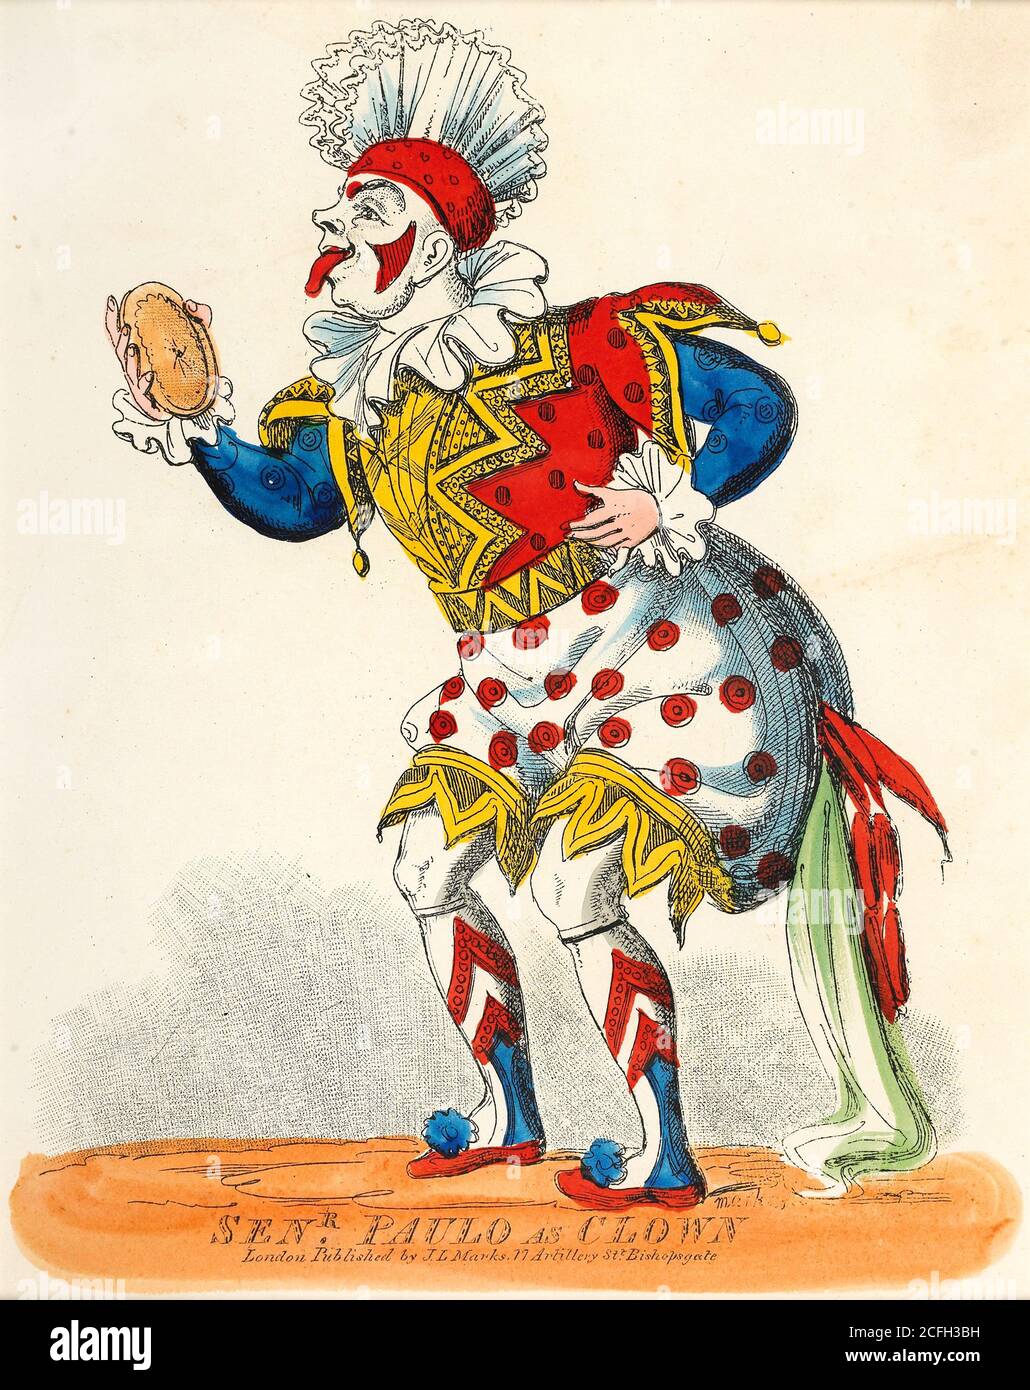 Marcos, J.L., Retrato teatral, Senr Paulo as Clown, Circa 1822-1839, impresión, Museo de Londres, Inglaterra. Foto de stock